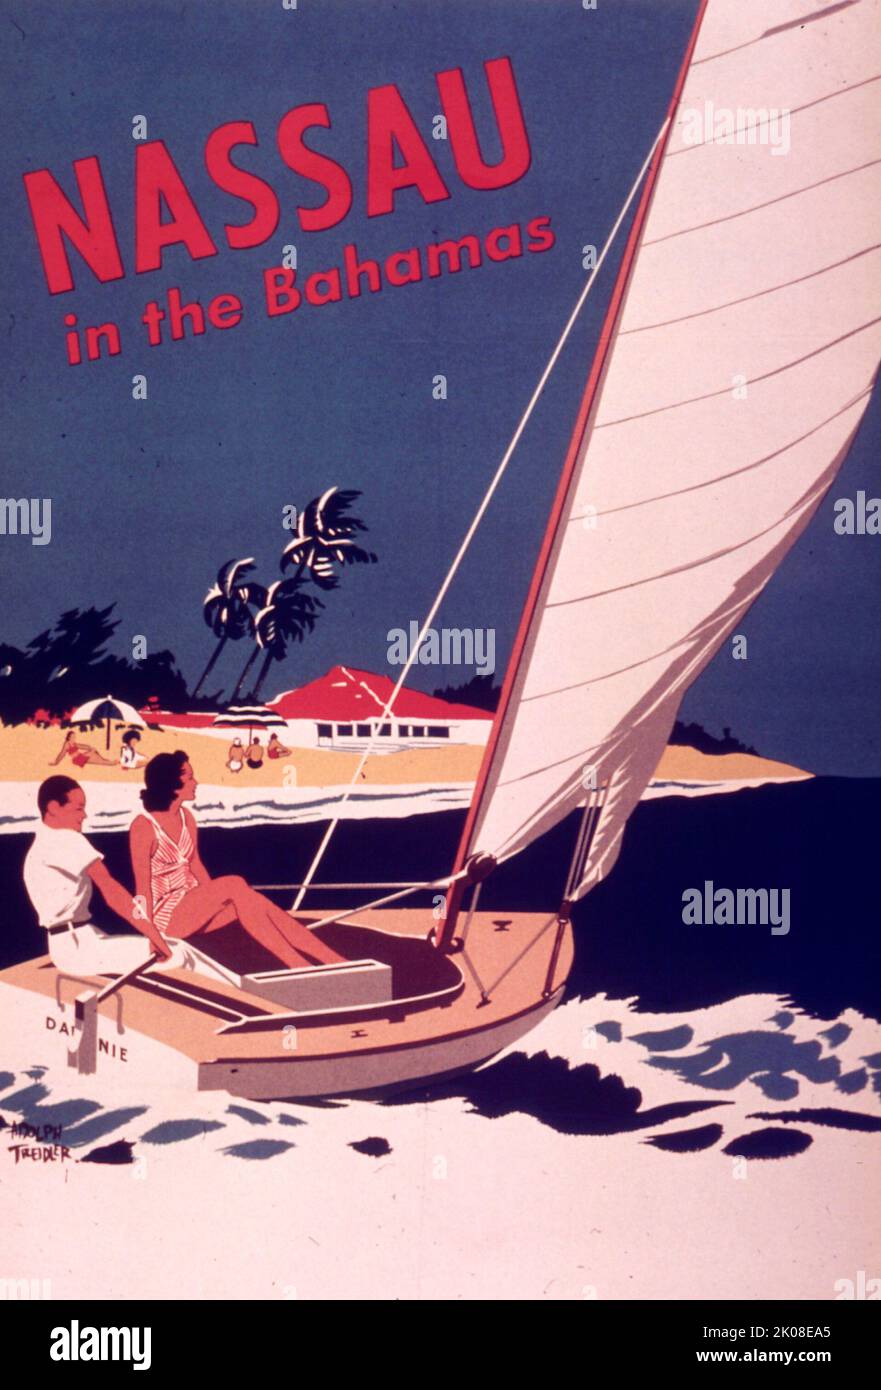 Nassau in the Bahamas - Advertisement poster, 1940s Stock Photo